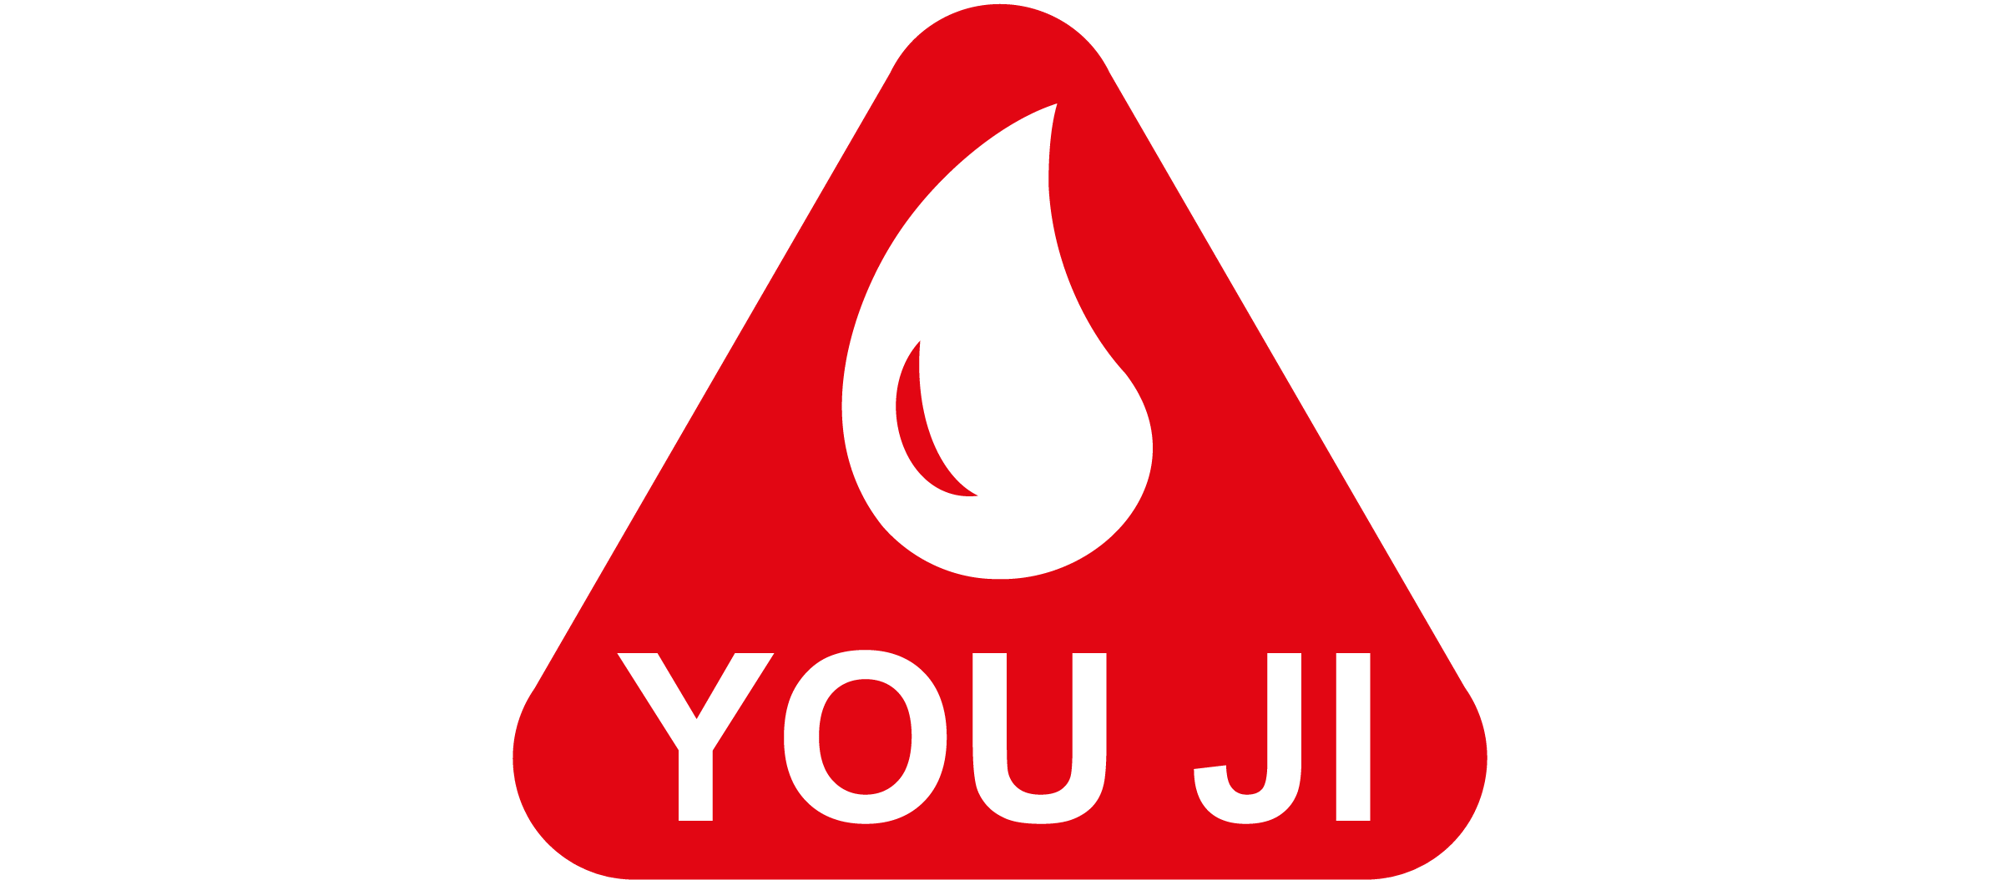 YouJi_Logo_eps